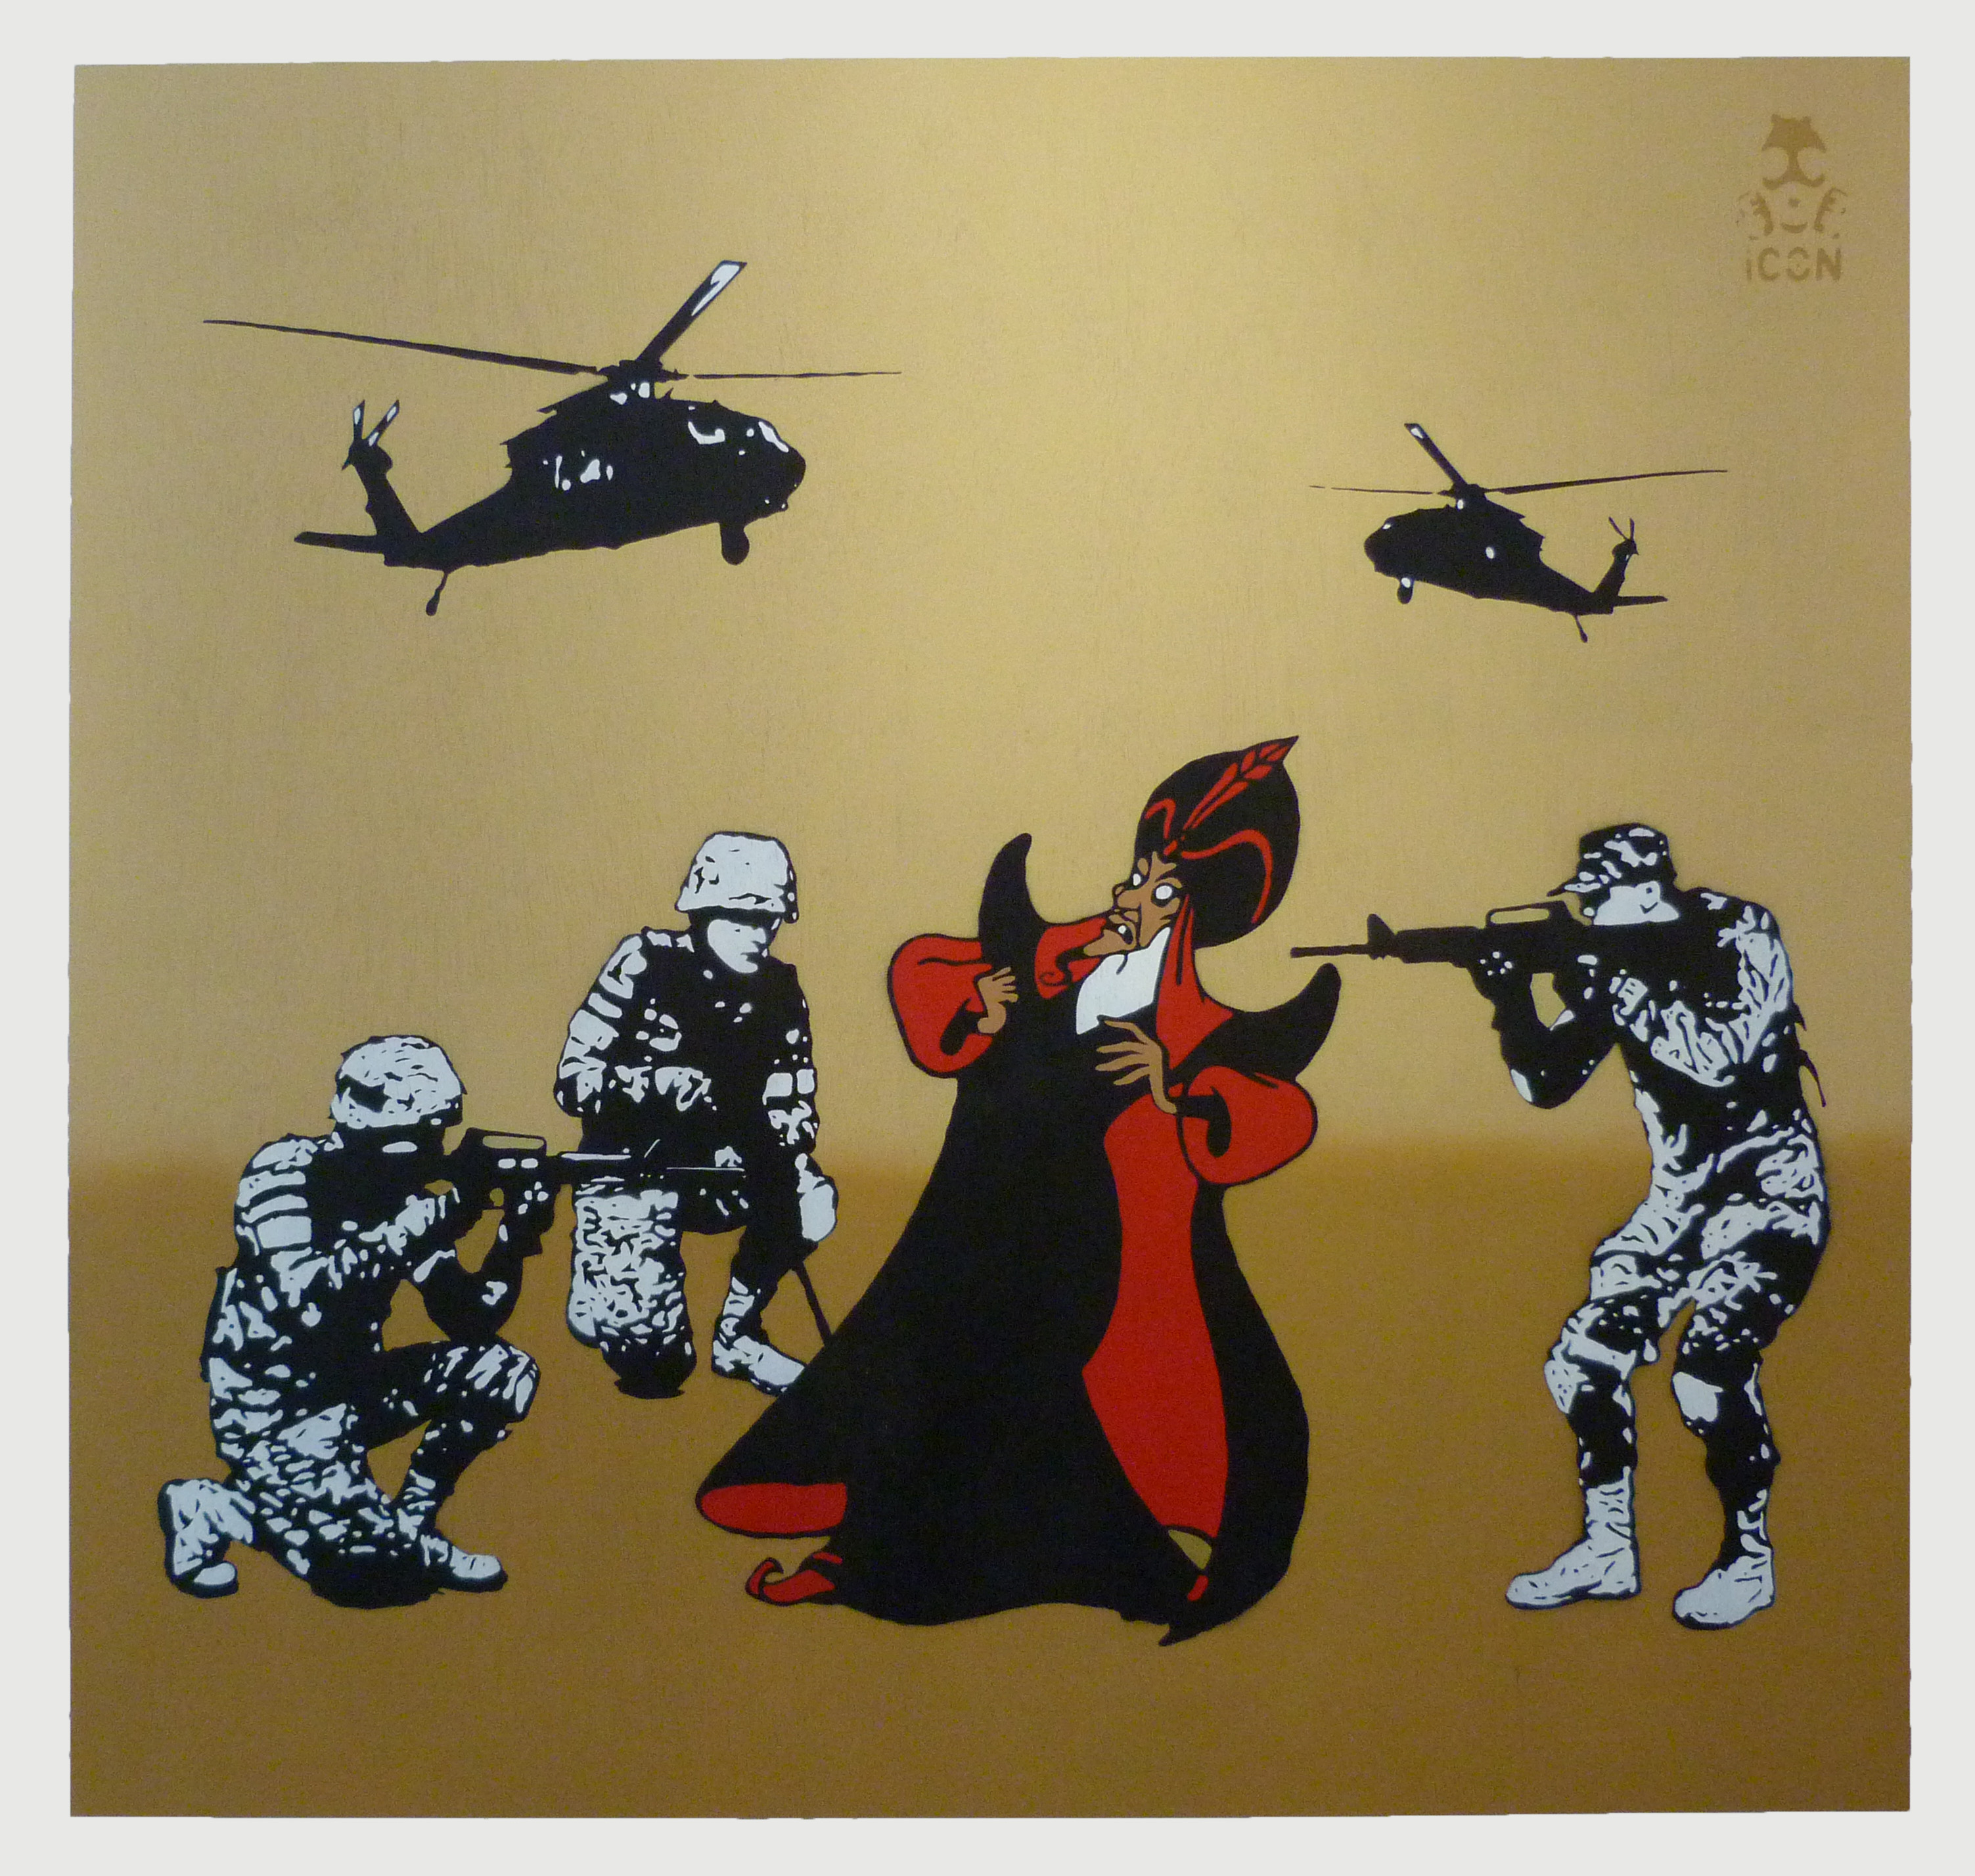 Nice Images Collection: War On Terror Desktop Wallpapers